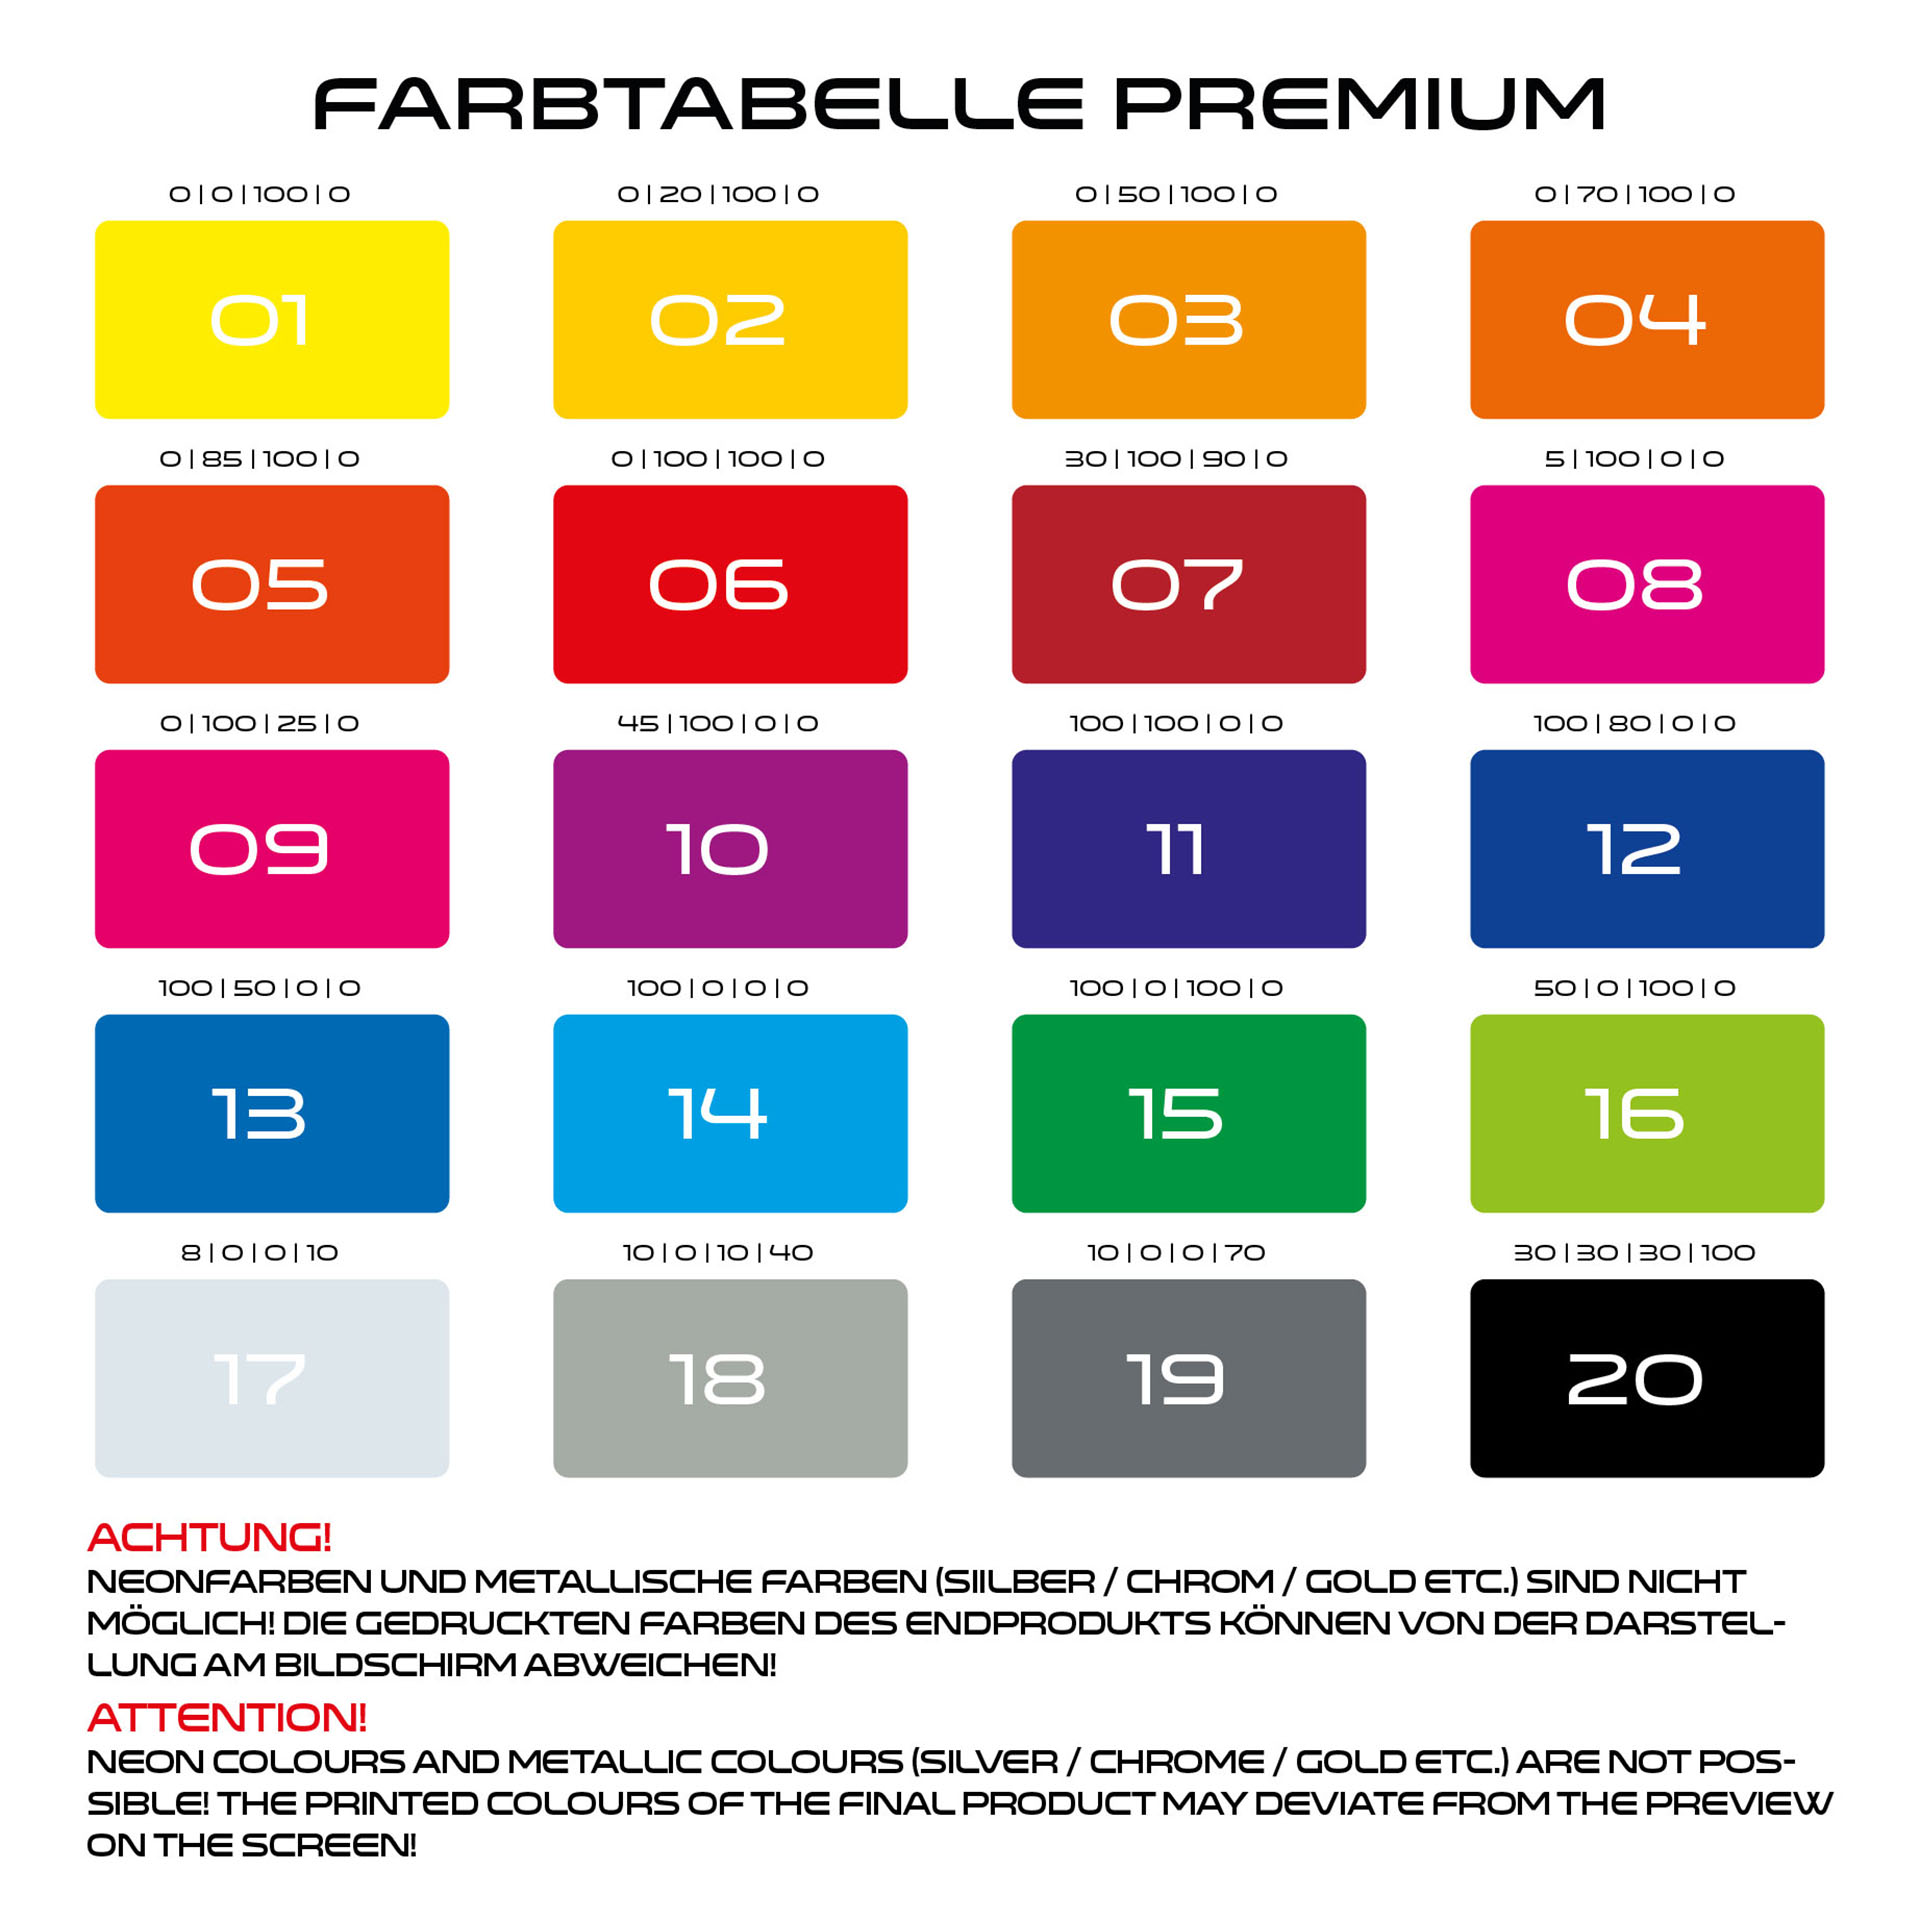 RACING V2 Felgenaufkleber Premium geteilt Farbtabelle Premium Wheelsticker